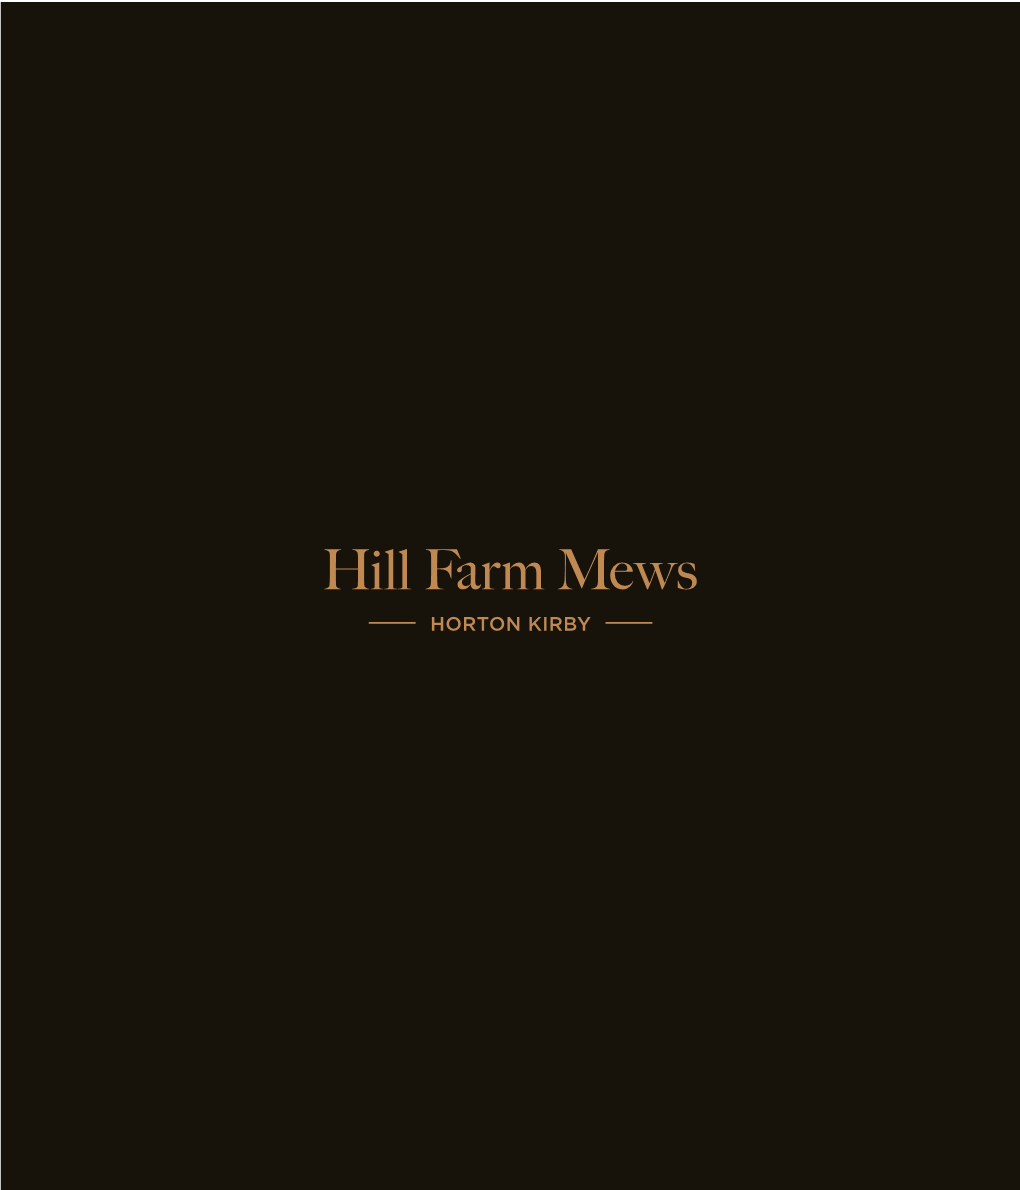 HORTON KIRBY Welcome to Hill Farm Mews, Horton Kirby, Kent